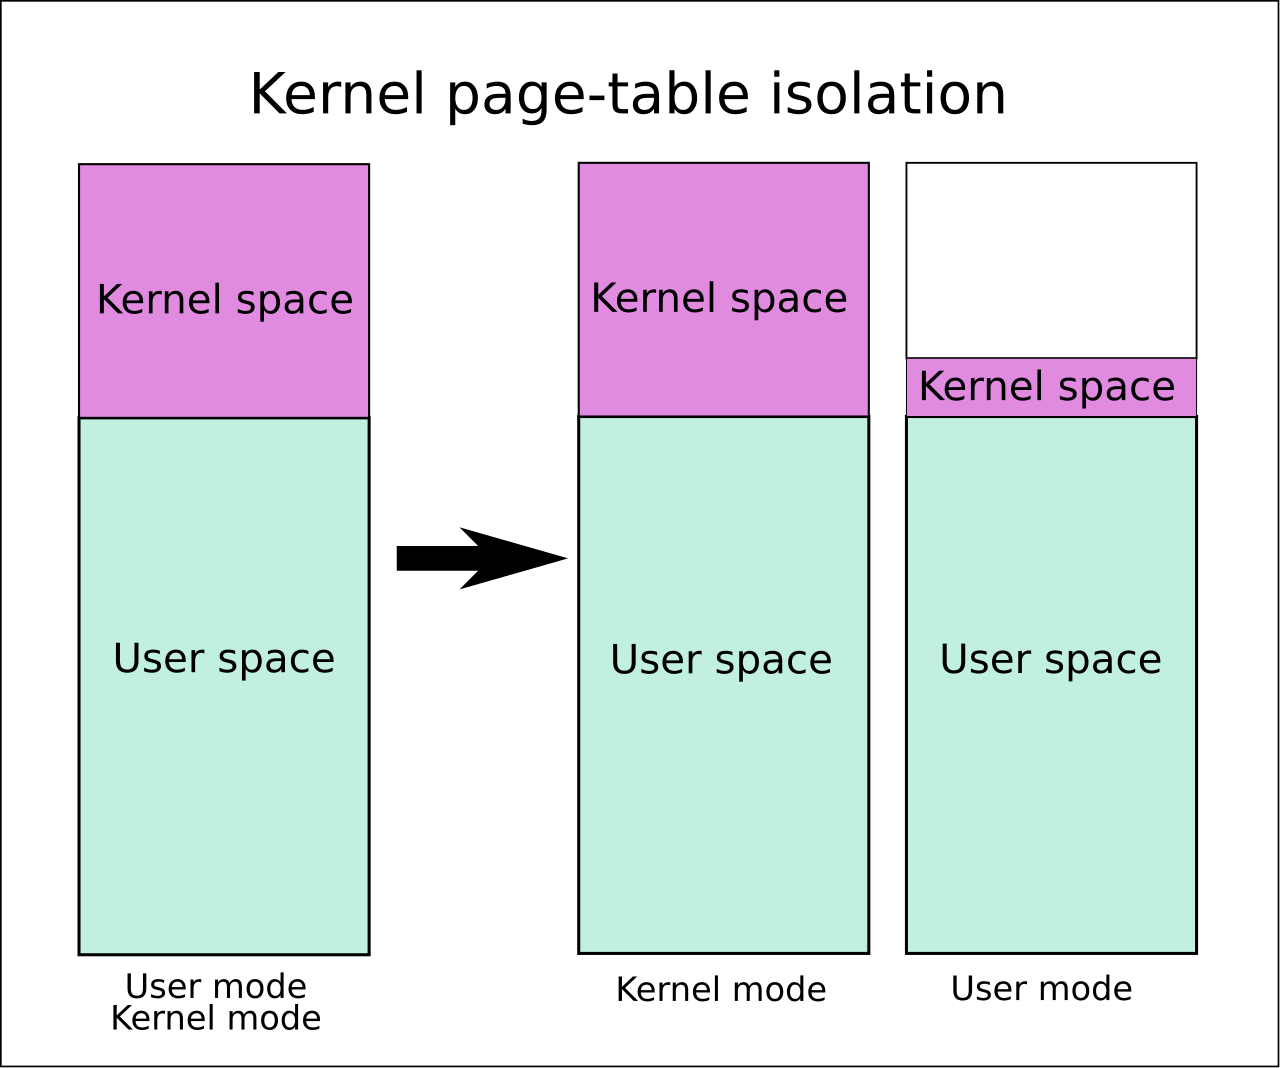 kernel address space vs user address space